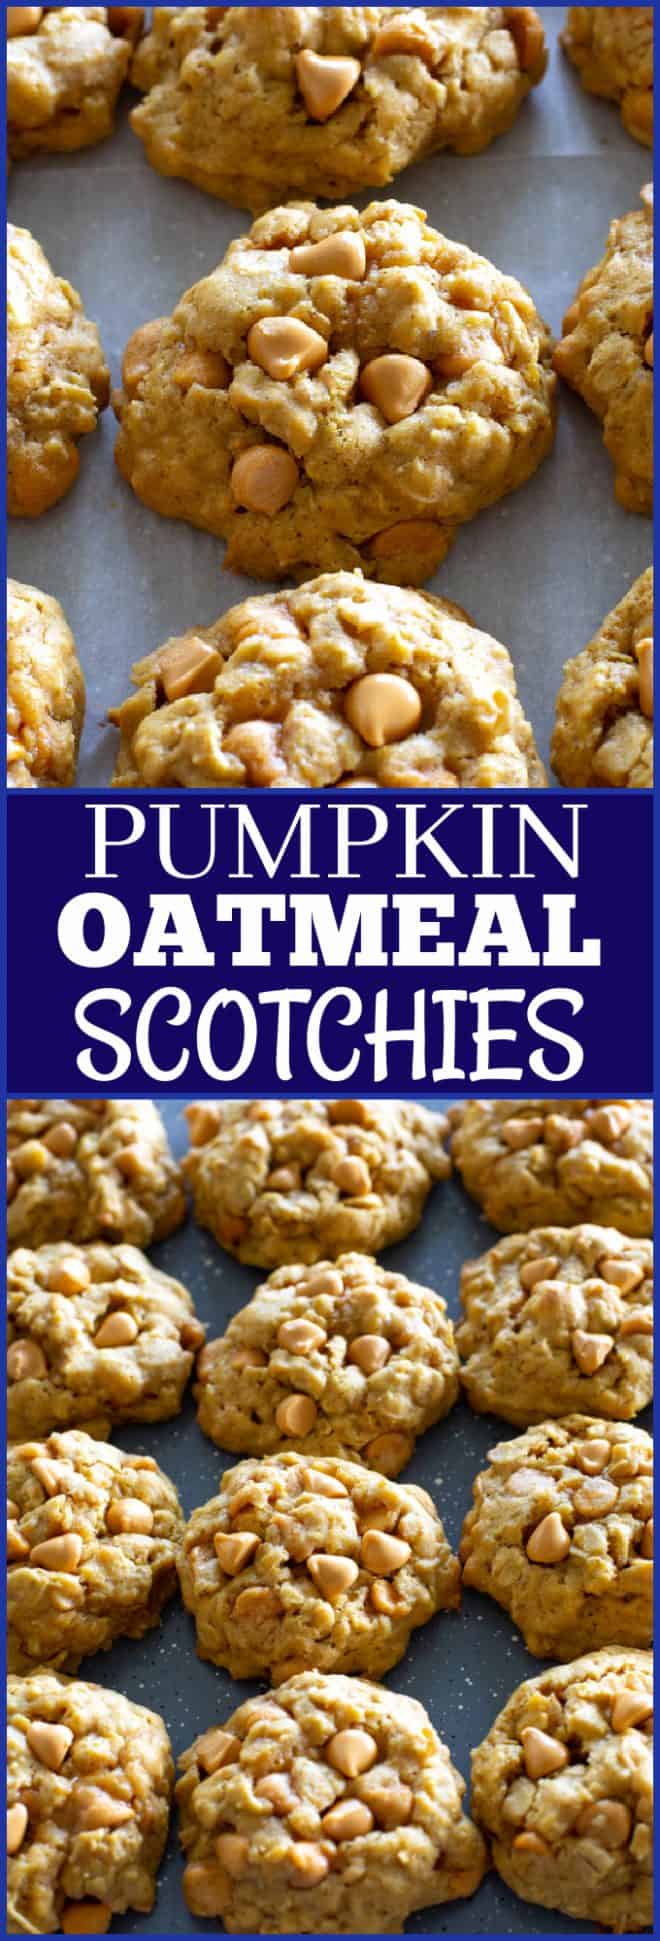 pumpkin oatmeal scotchies